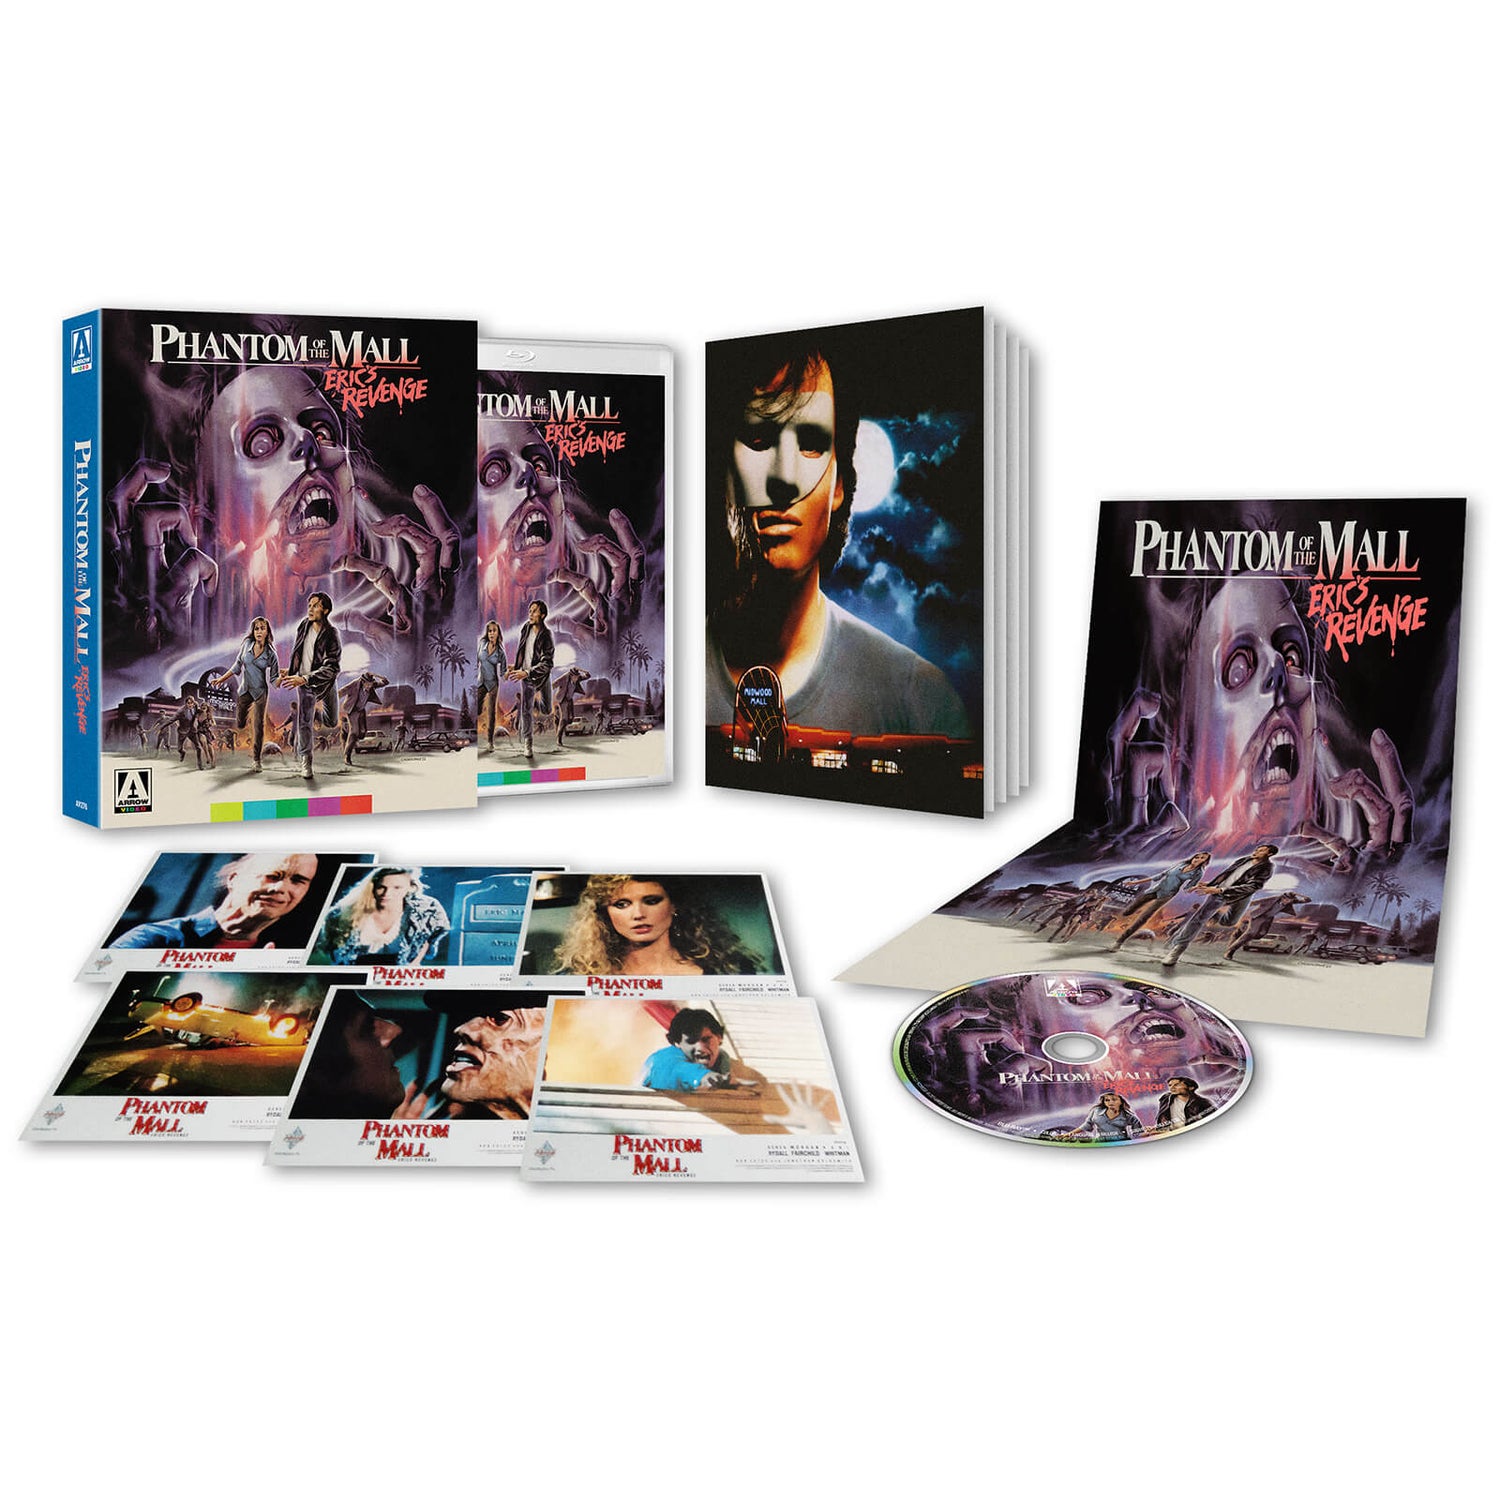 Phantom Of The Mall: Eric's Revenge Limited Edition Blu-ray